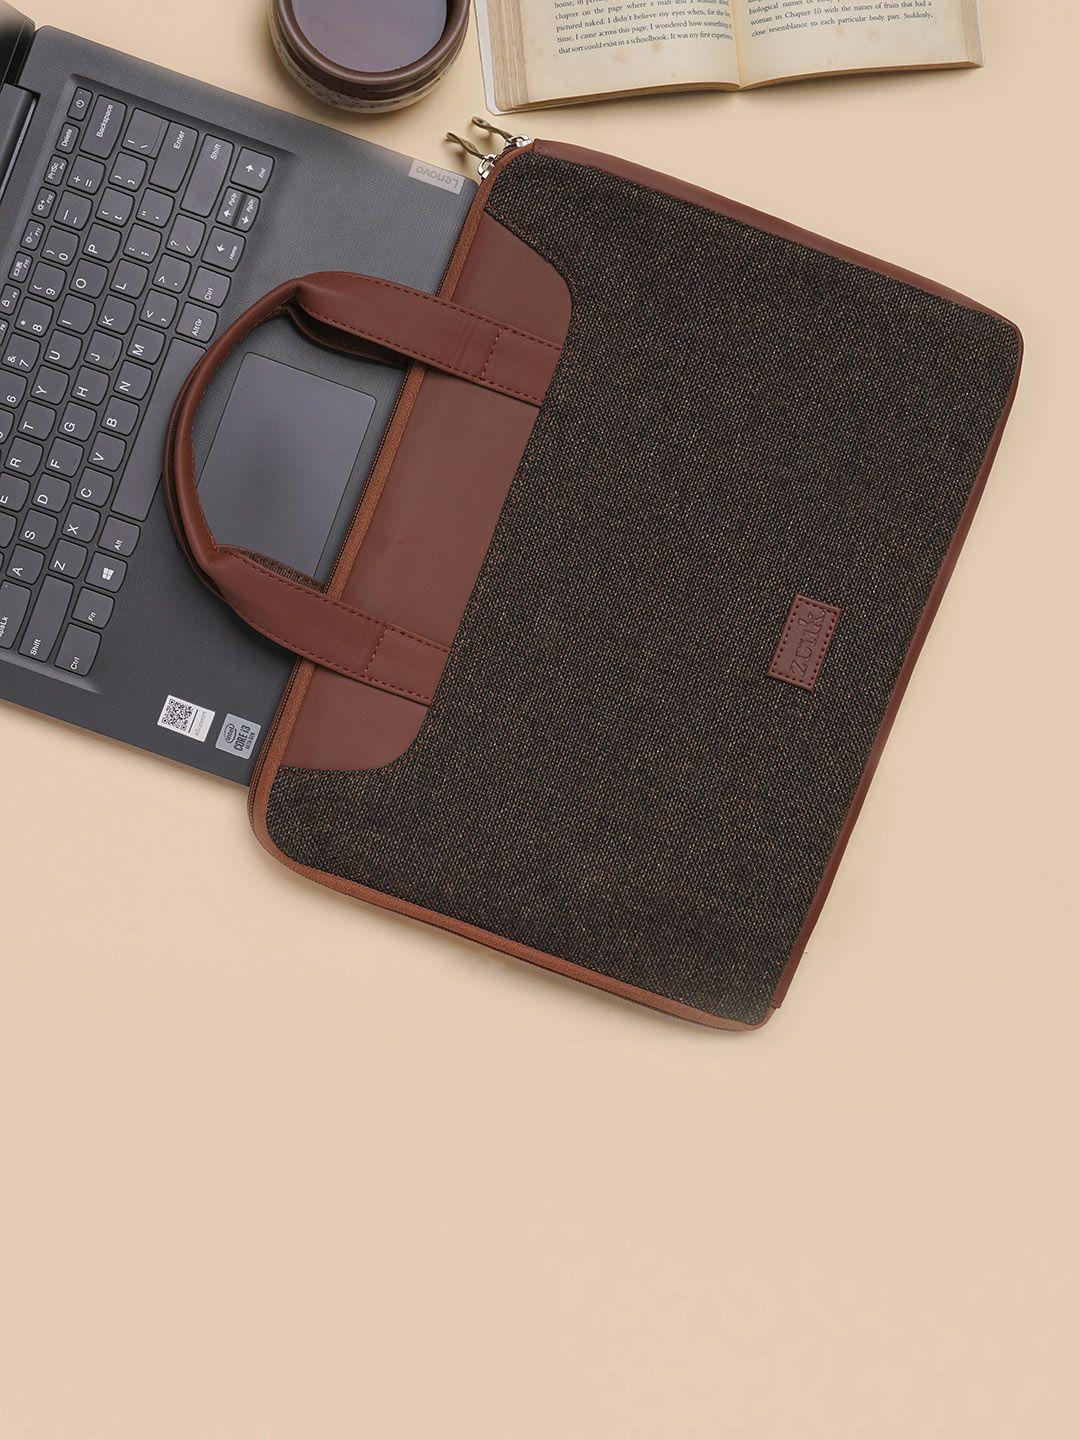 zouk men black & brown textured jute laptop sleeve